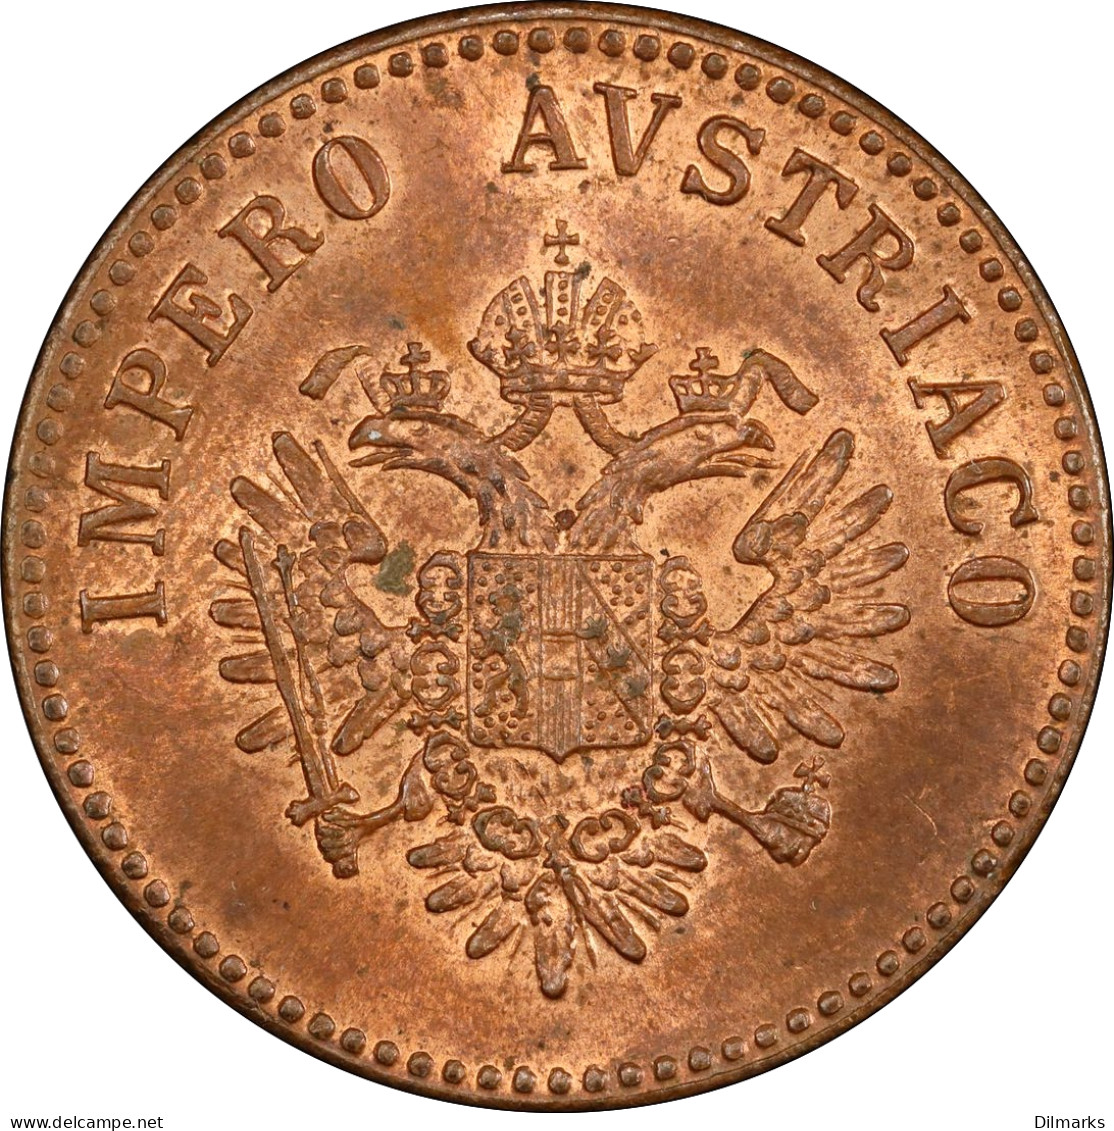 Lombardy-Venetia 5 Centesimi 1852 V, PCGS MS64 RB, &quot;Franz Joseph I (1848-1866)&quot; - Lituania